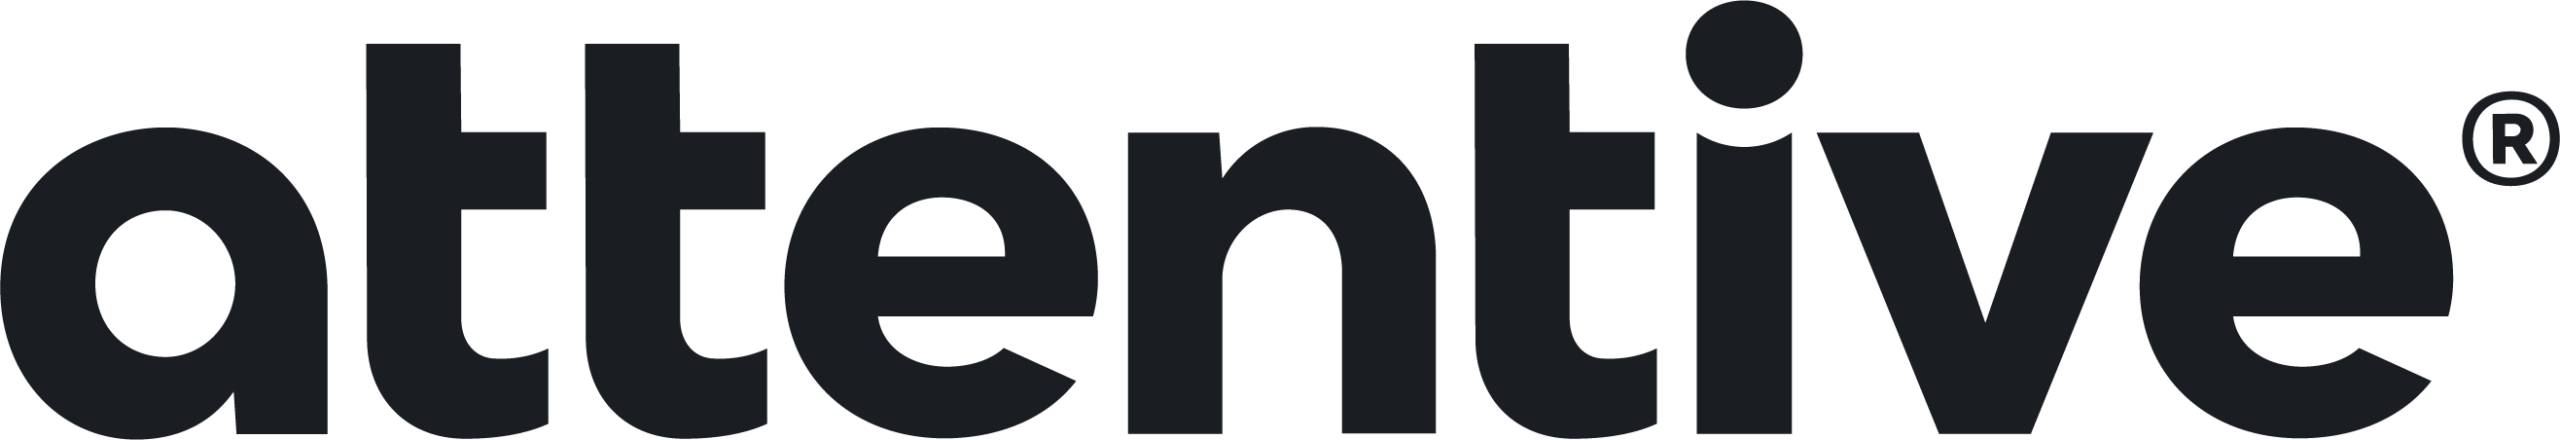 Attentive company logo